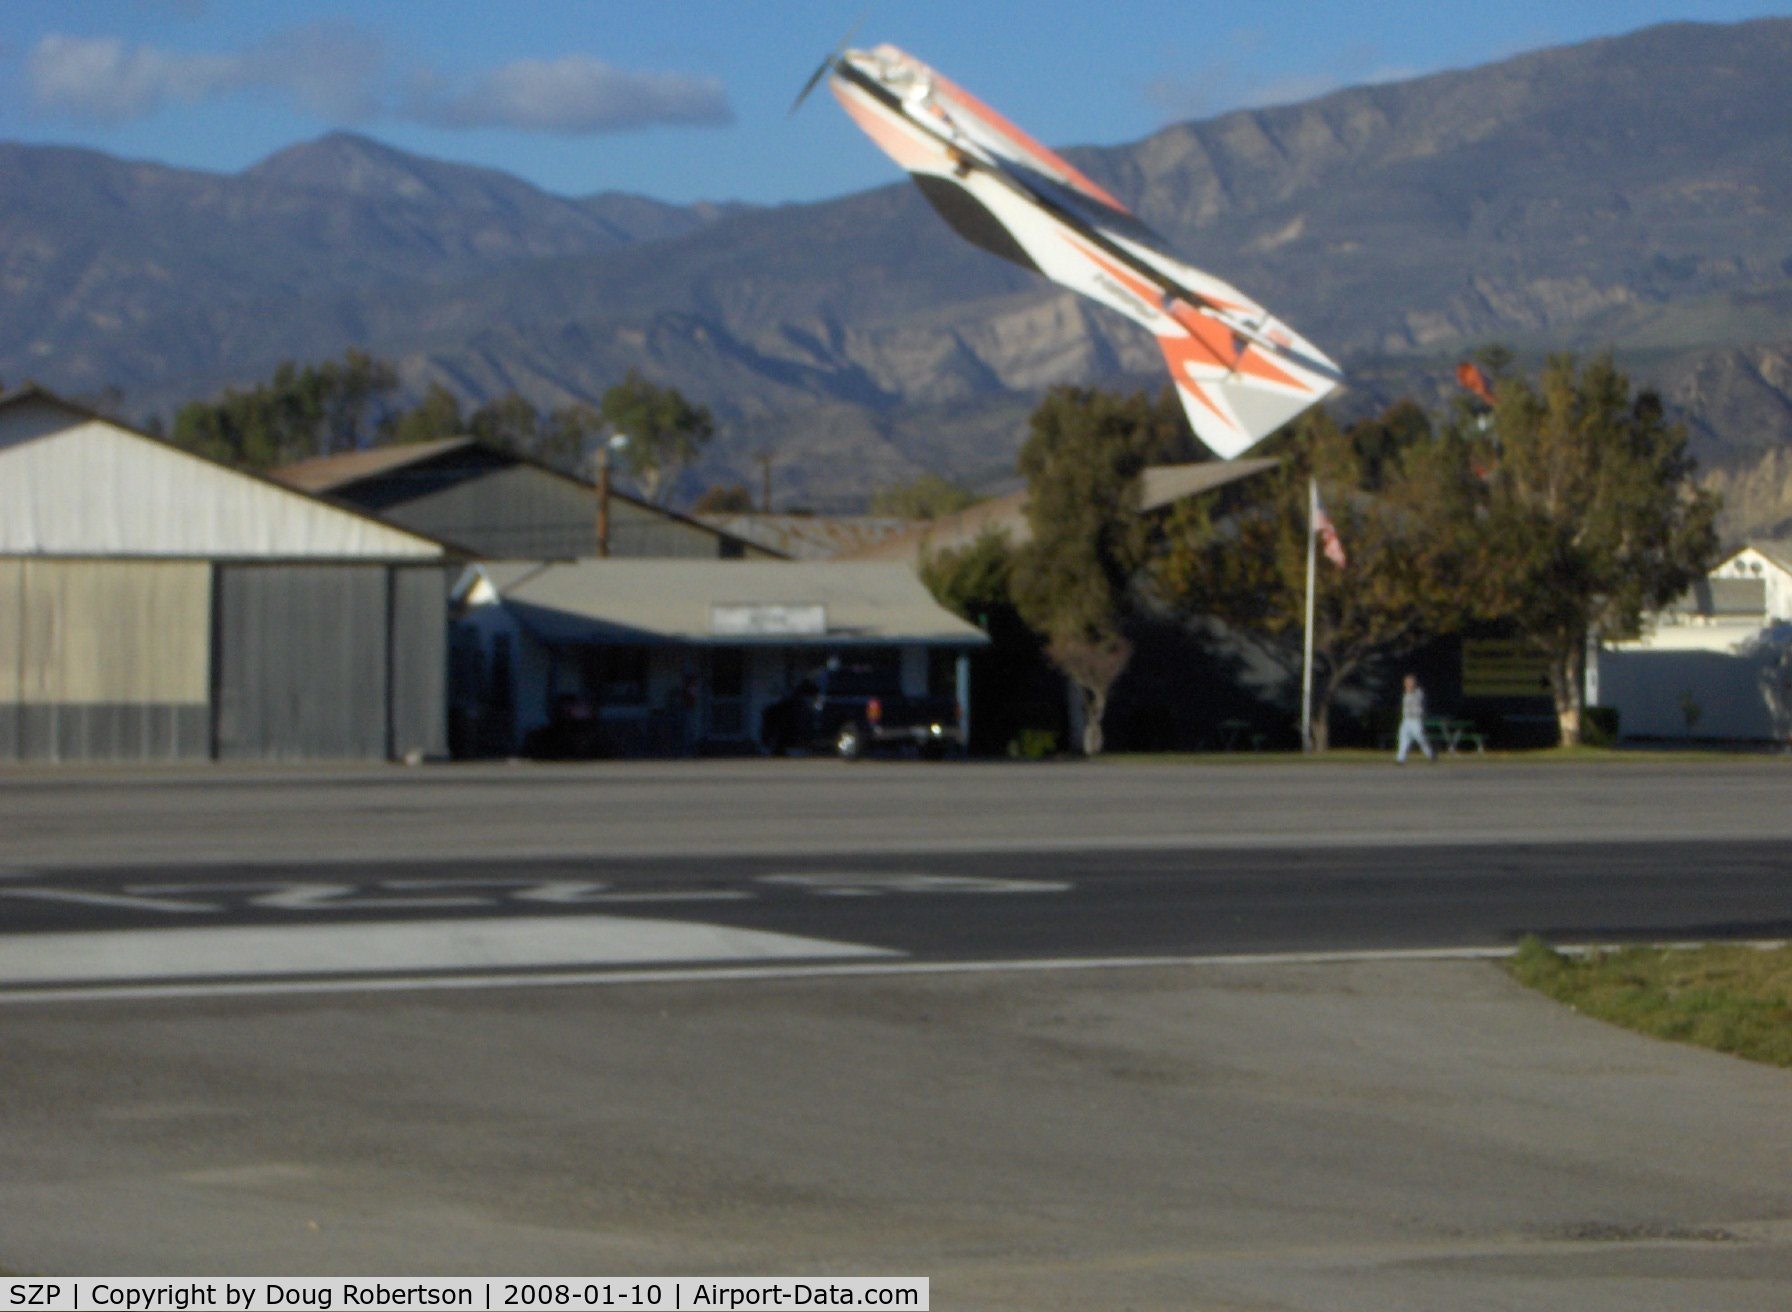 Santa Paula Airport (SZP) - RC Drone 'FLASH' extreme aerobatic, inverted climb